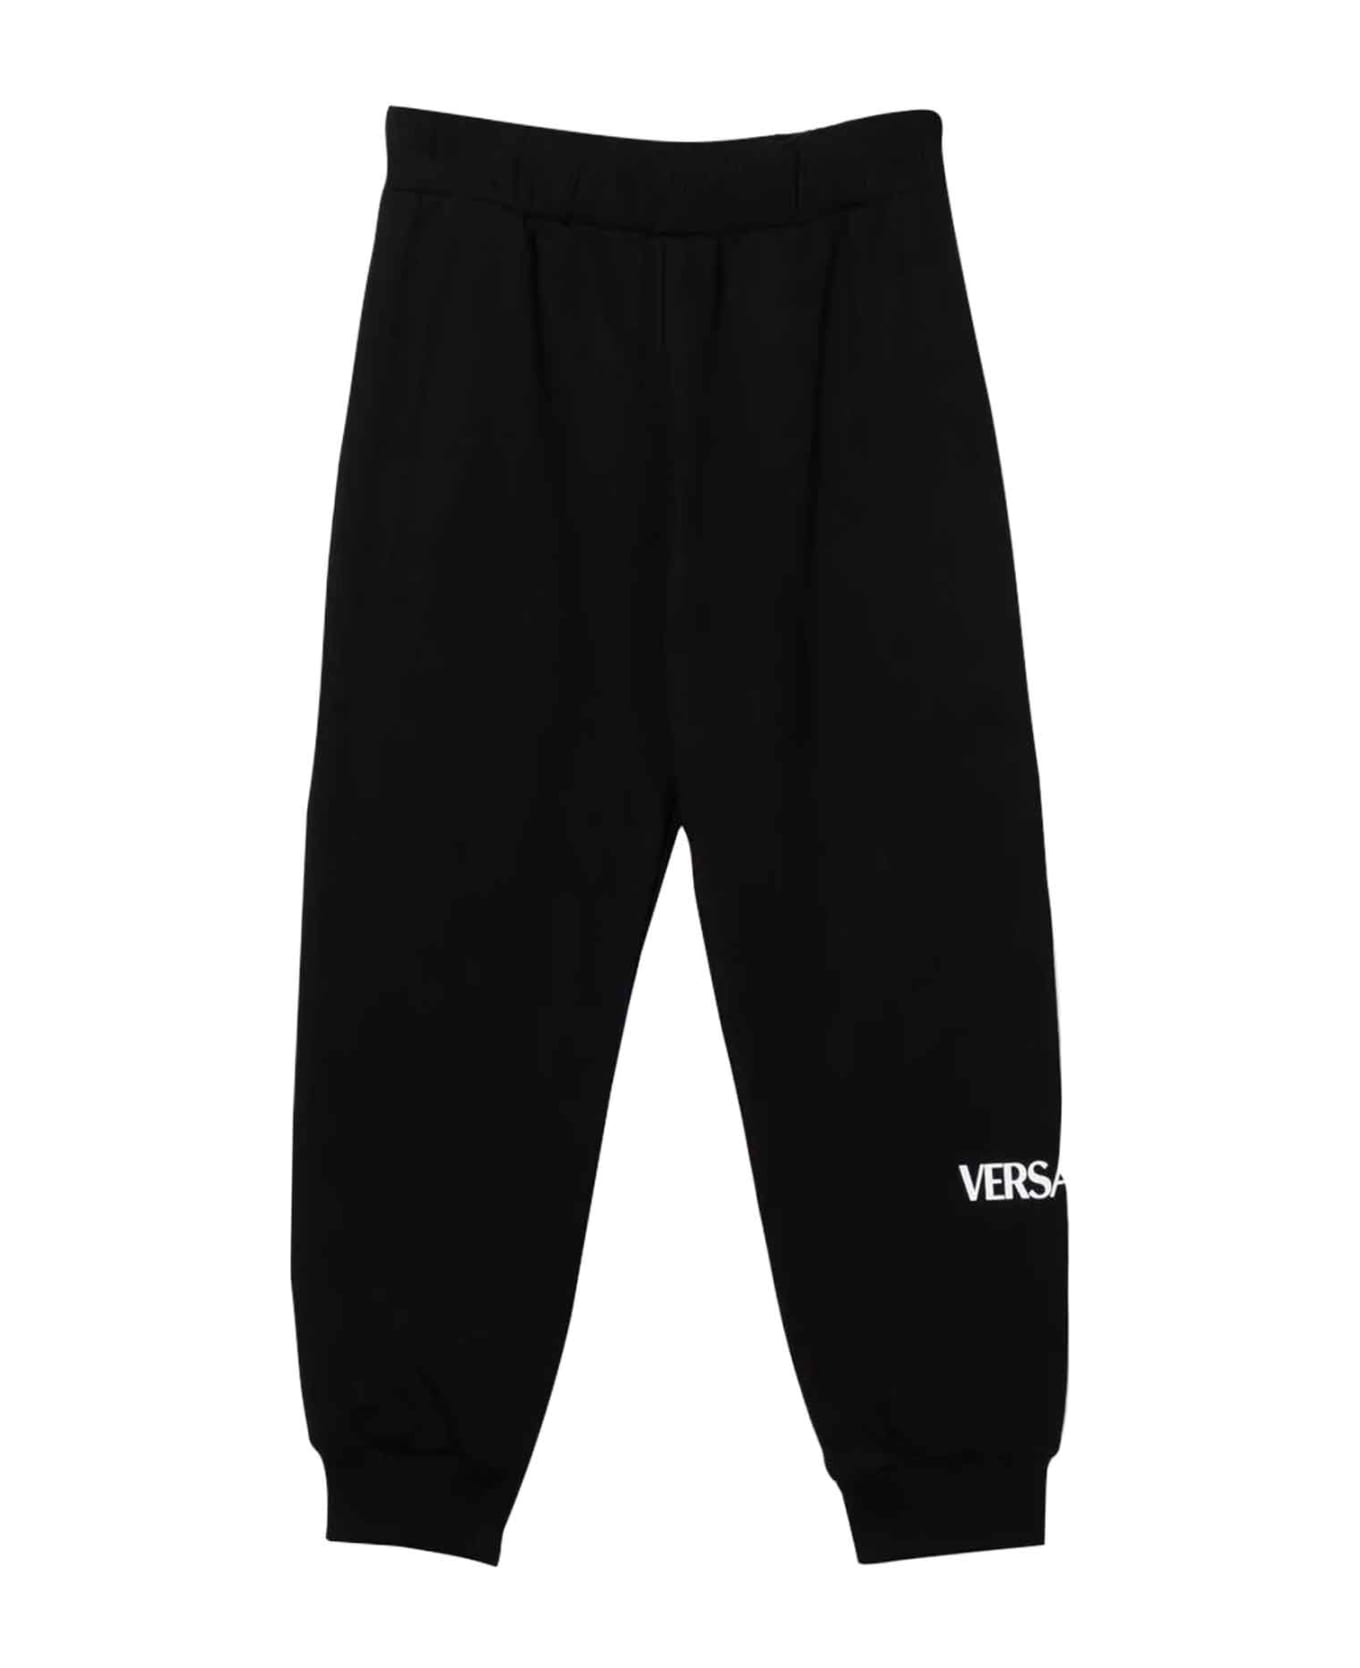 Versace Black Trousers Unisex Kids - Nero/bianco